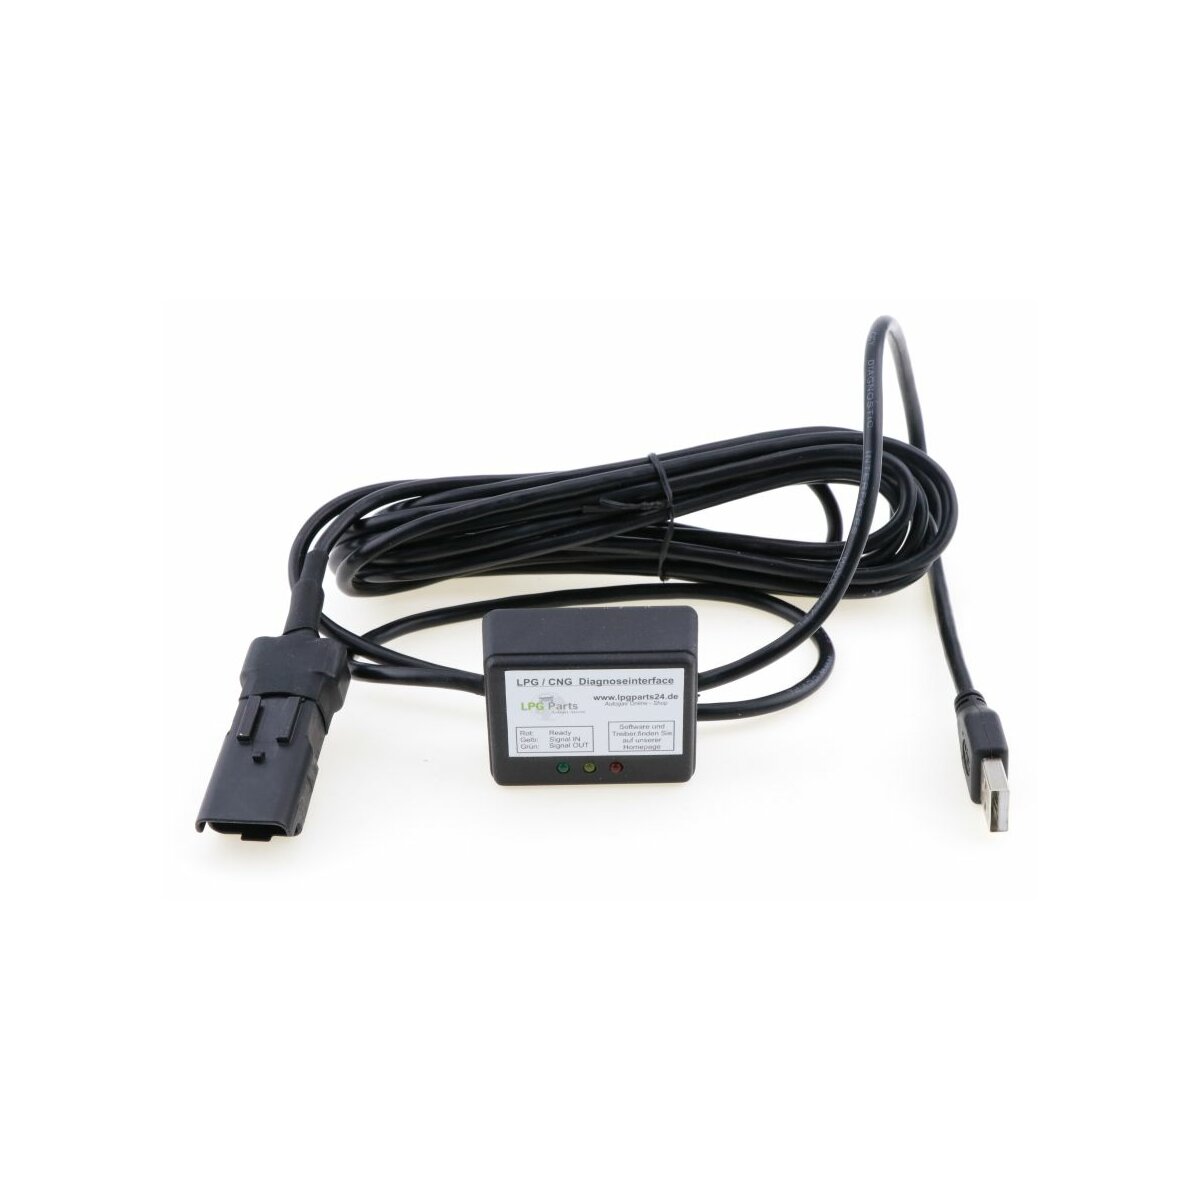 LPG Diagnose Interface Kabel für OMVL USB 